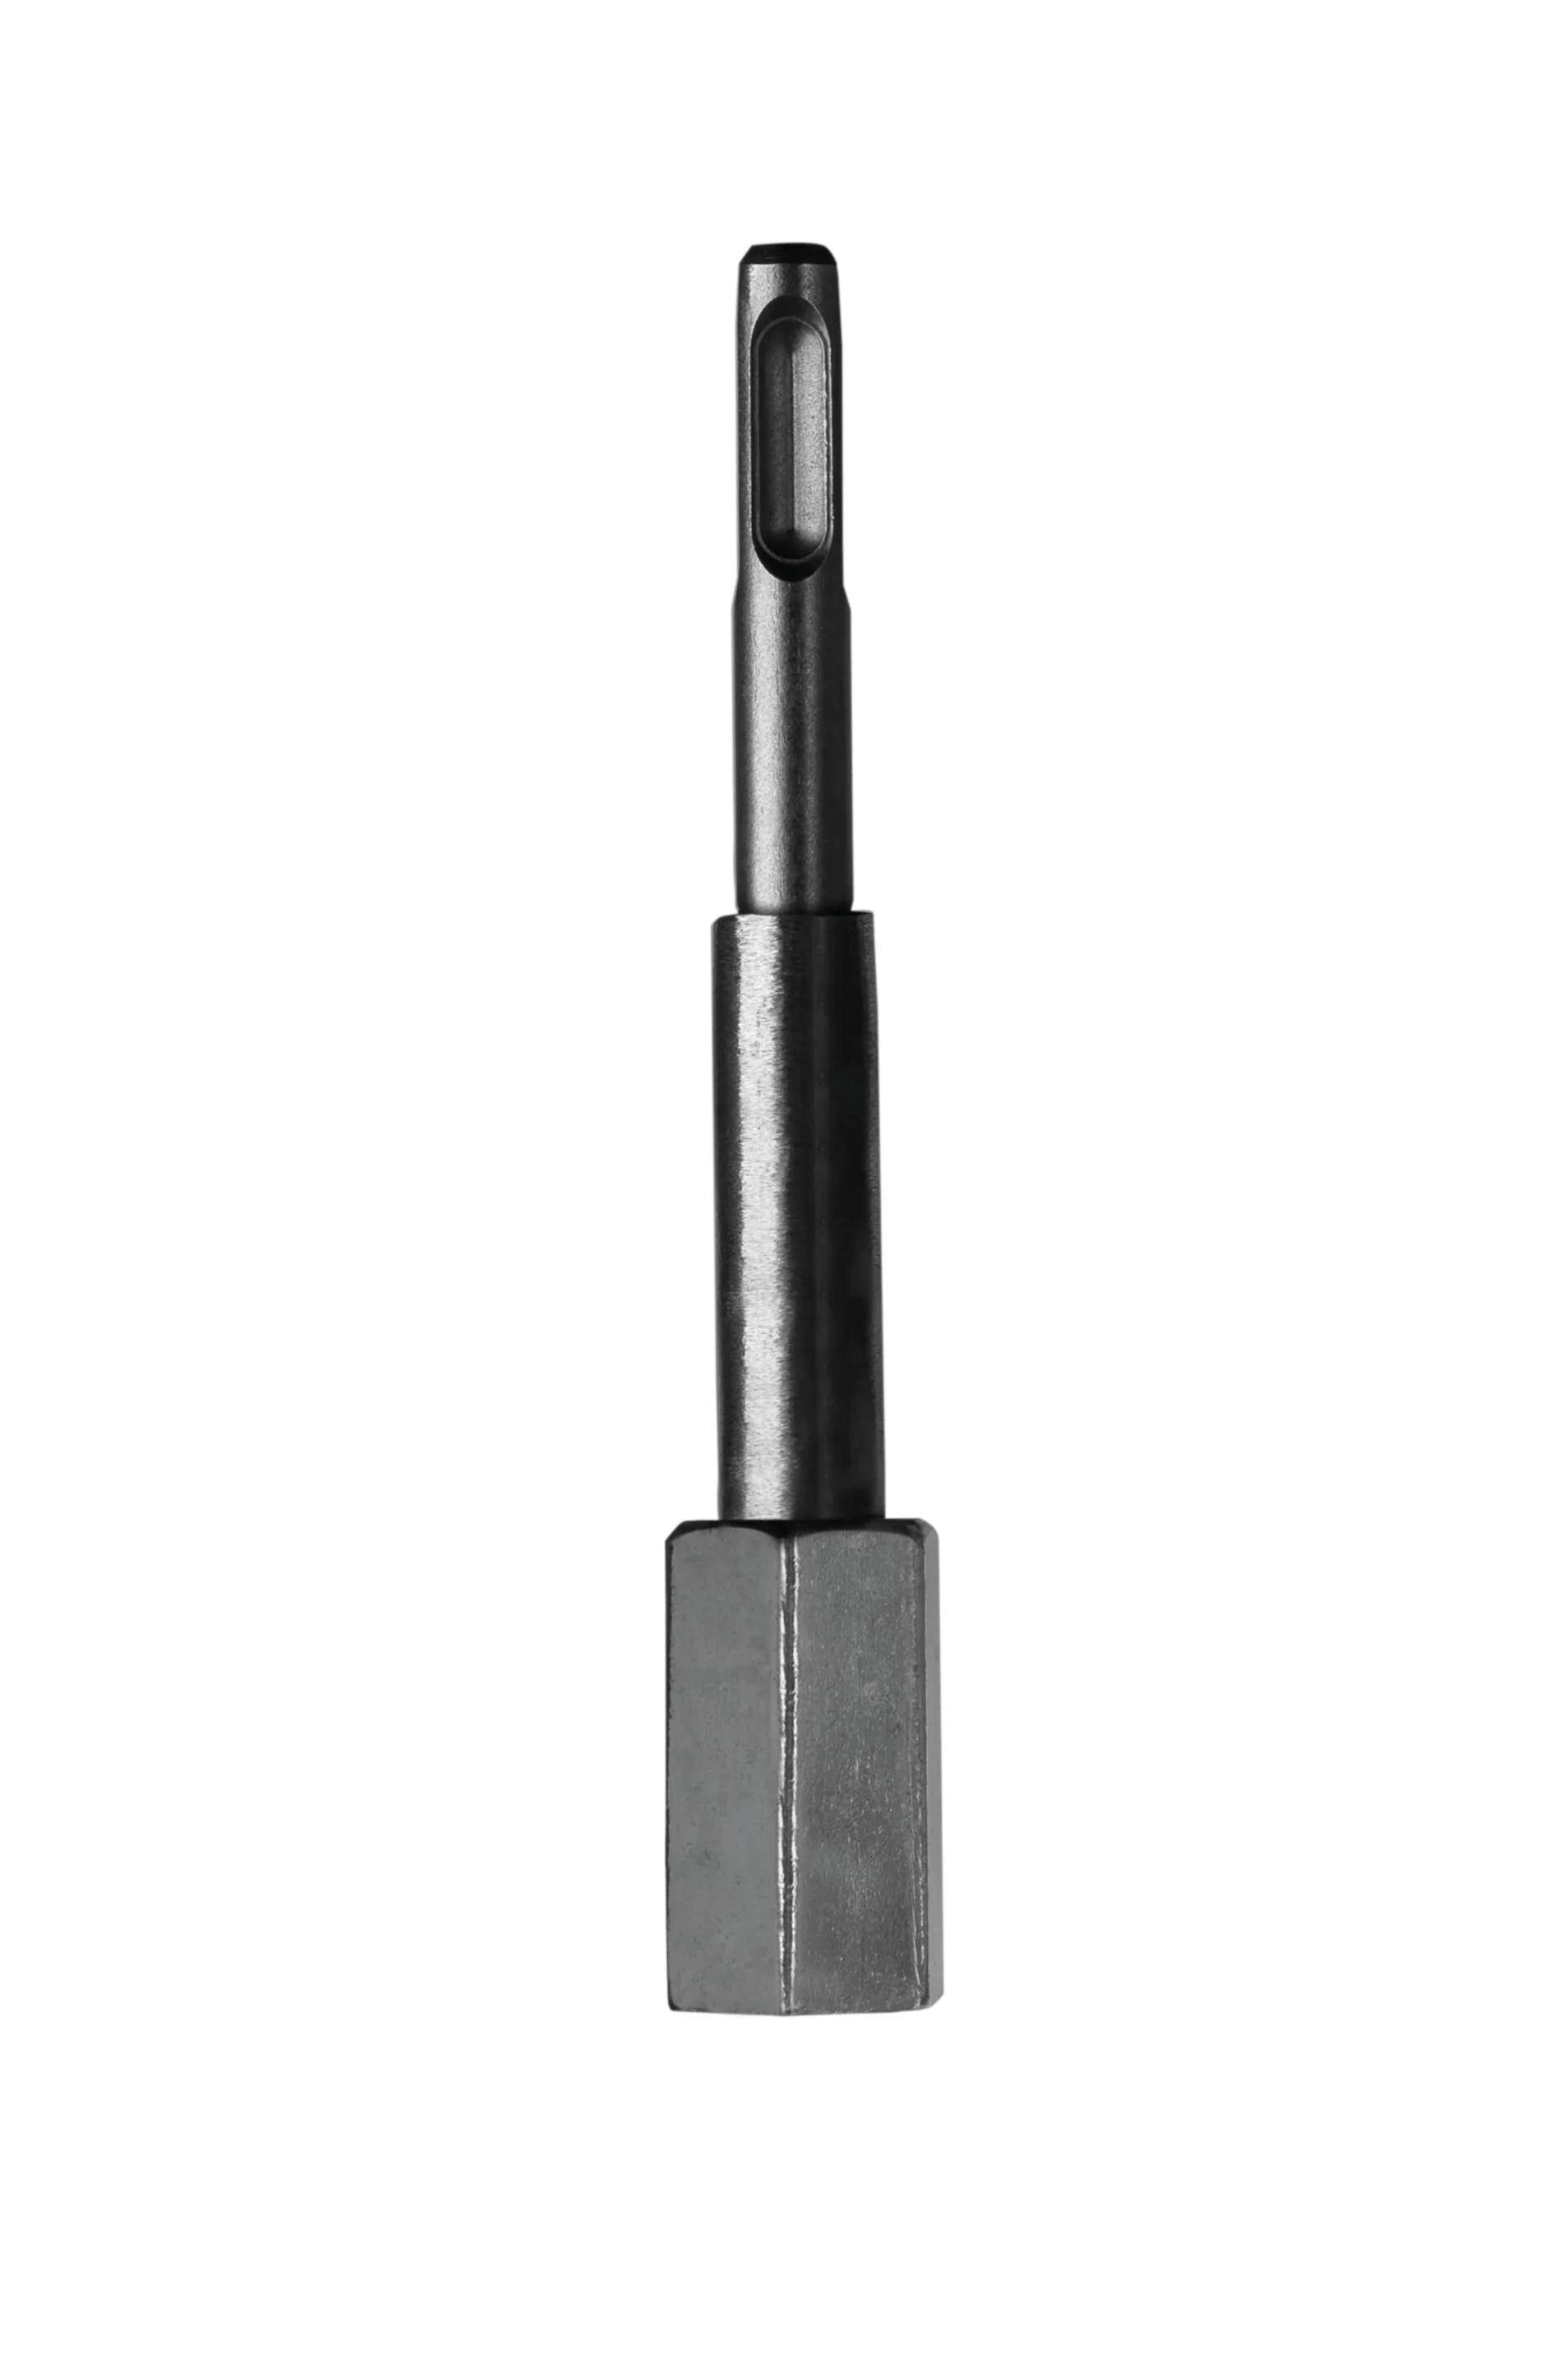 SDS +/ M14 paddle mixer adaptor (Photo 1)